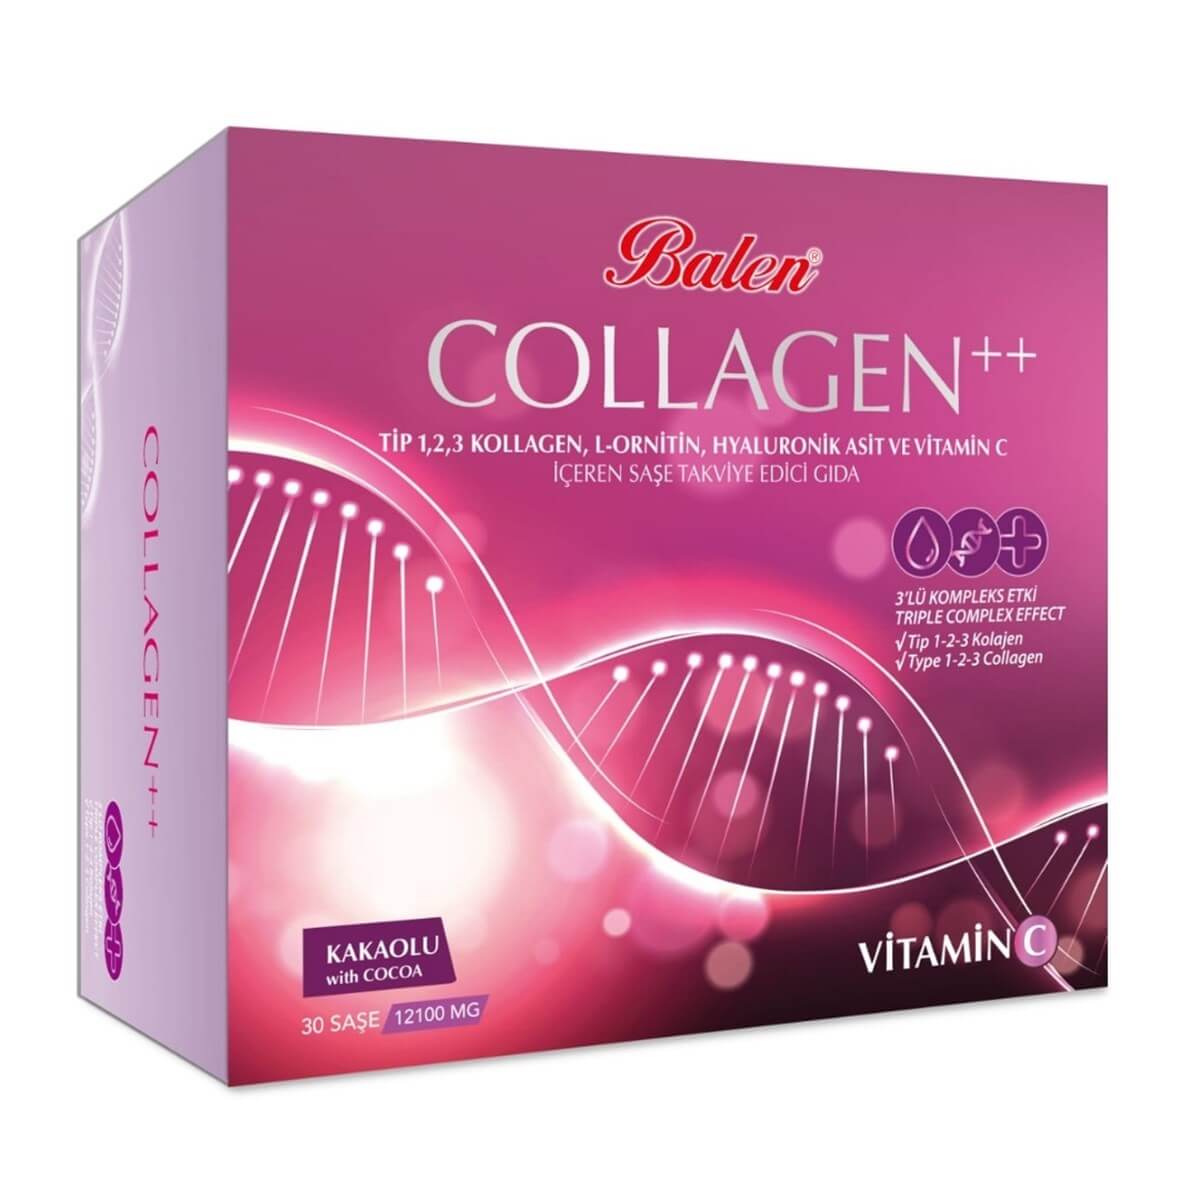 Balen Collagen Tip 1,2,3 L-Ornitin Hyaluronik Asit C Vitamini 30 Şase 12100mg